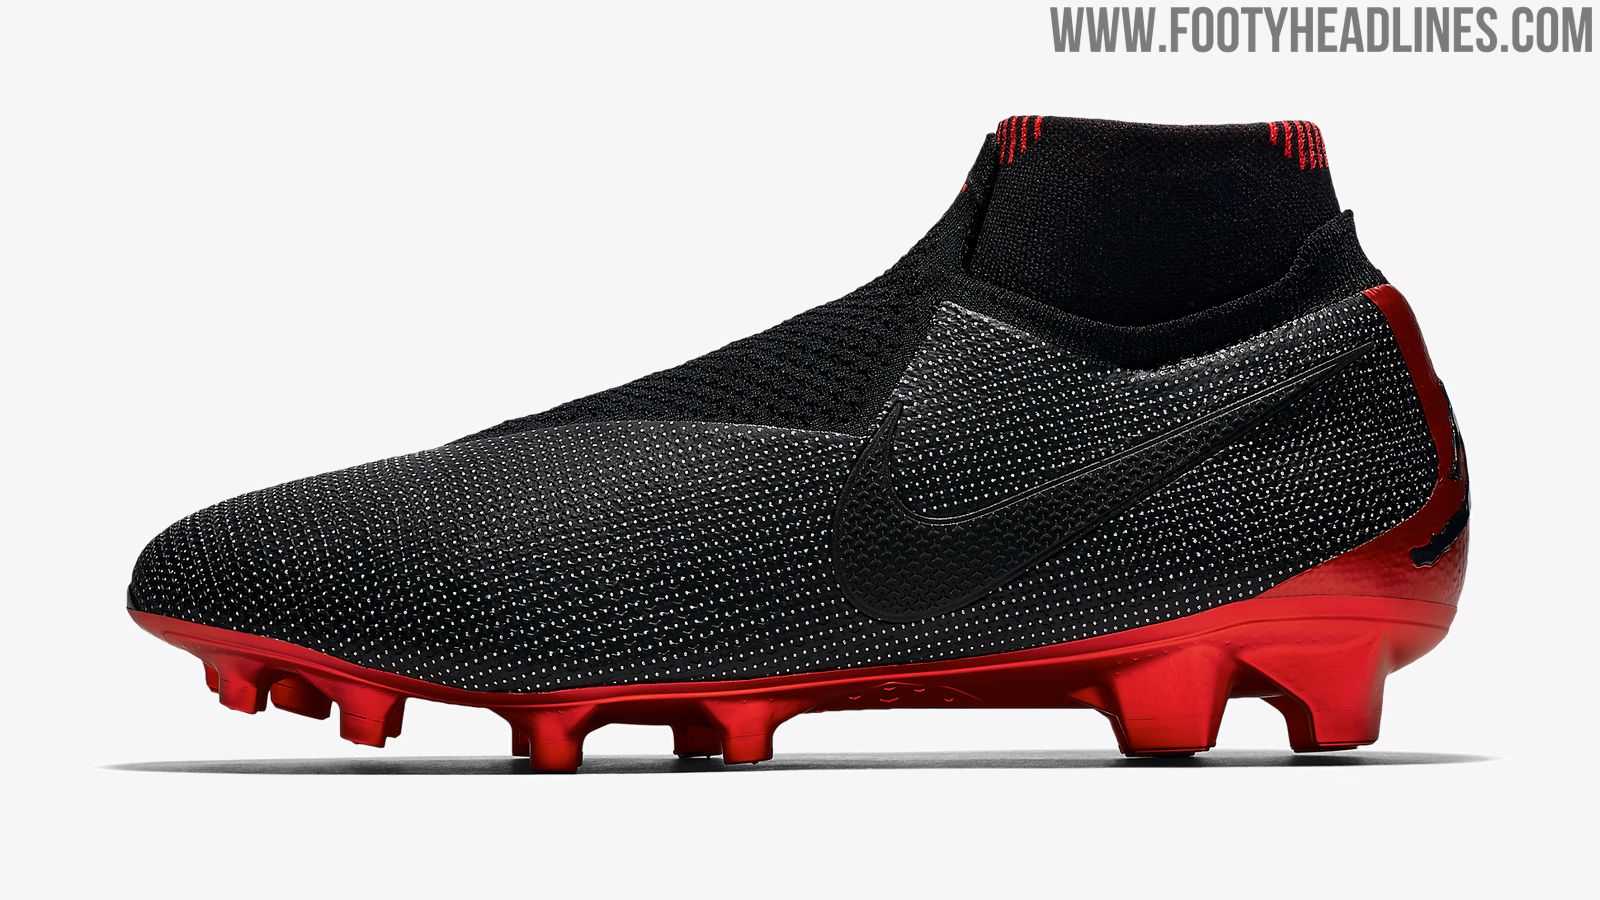 Nike x Jordan x PSG Boots Revealed - Footy Headlines